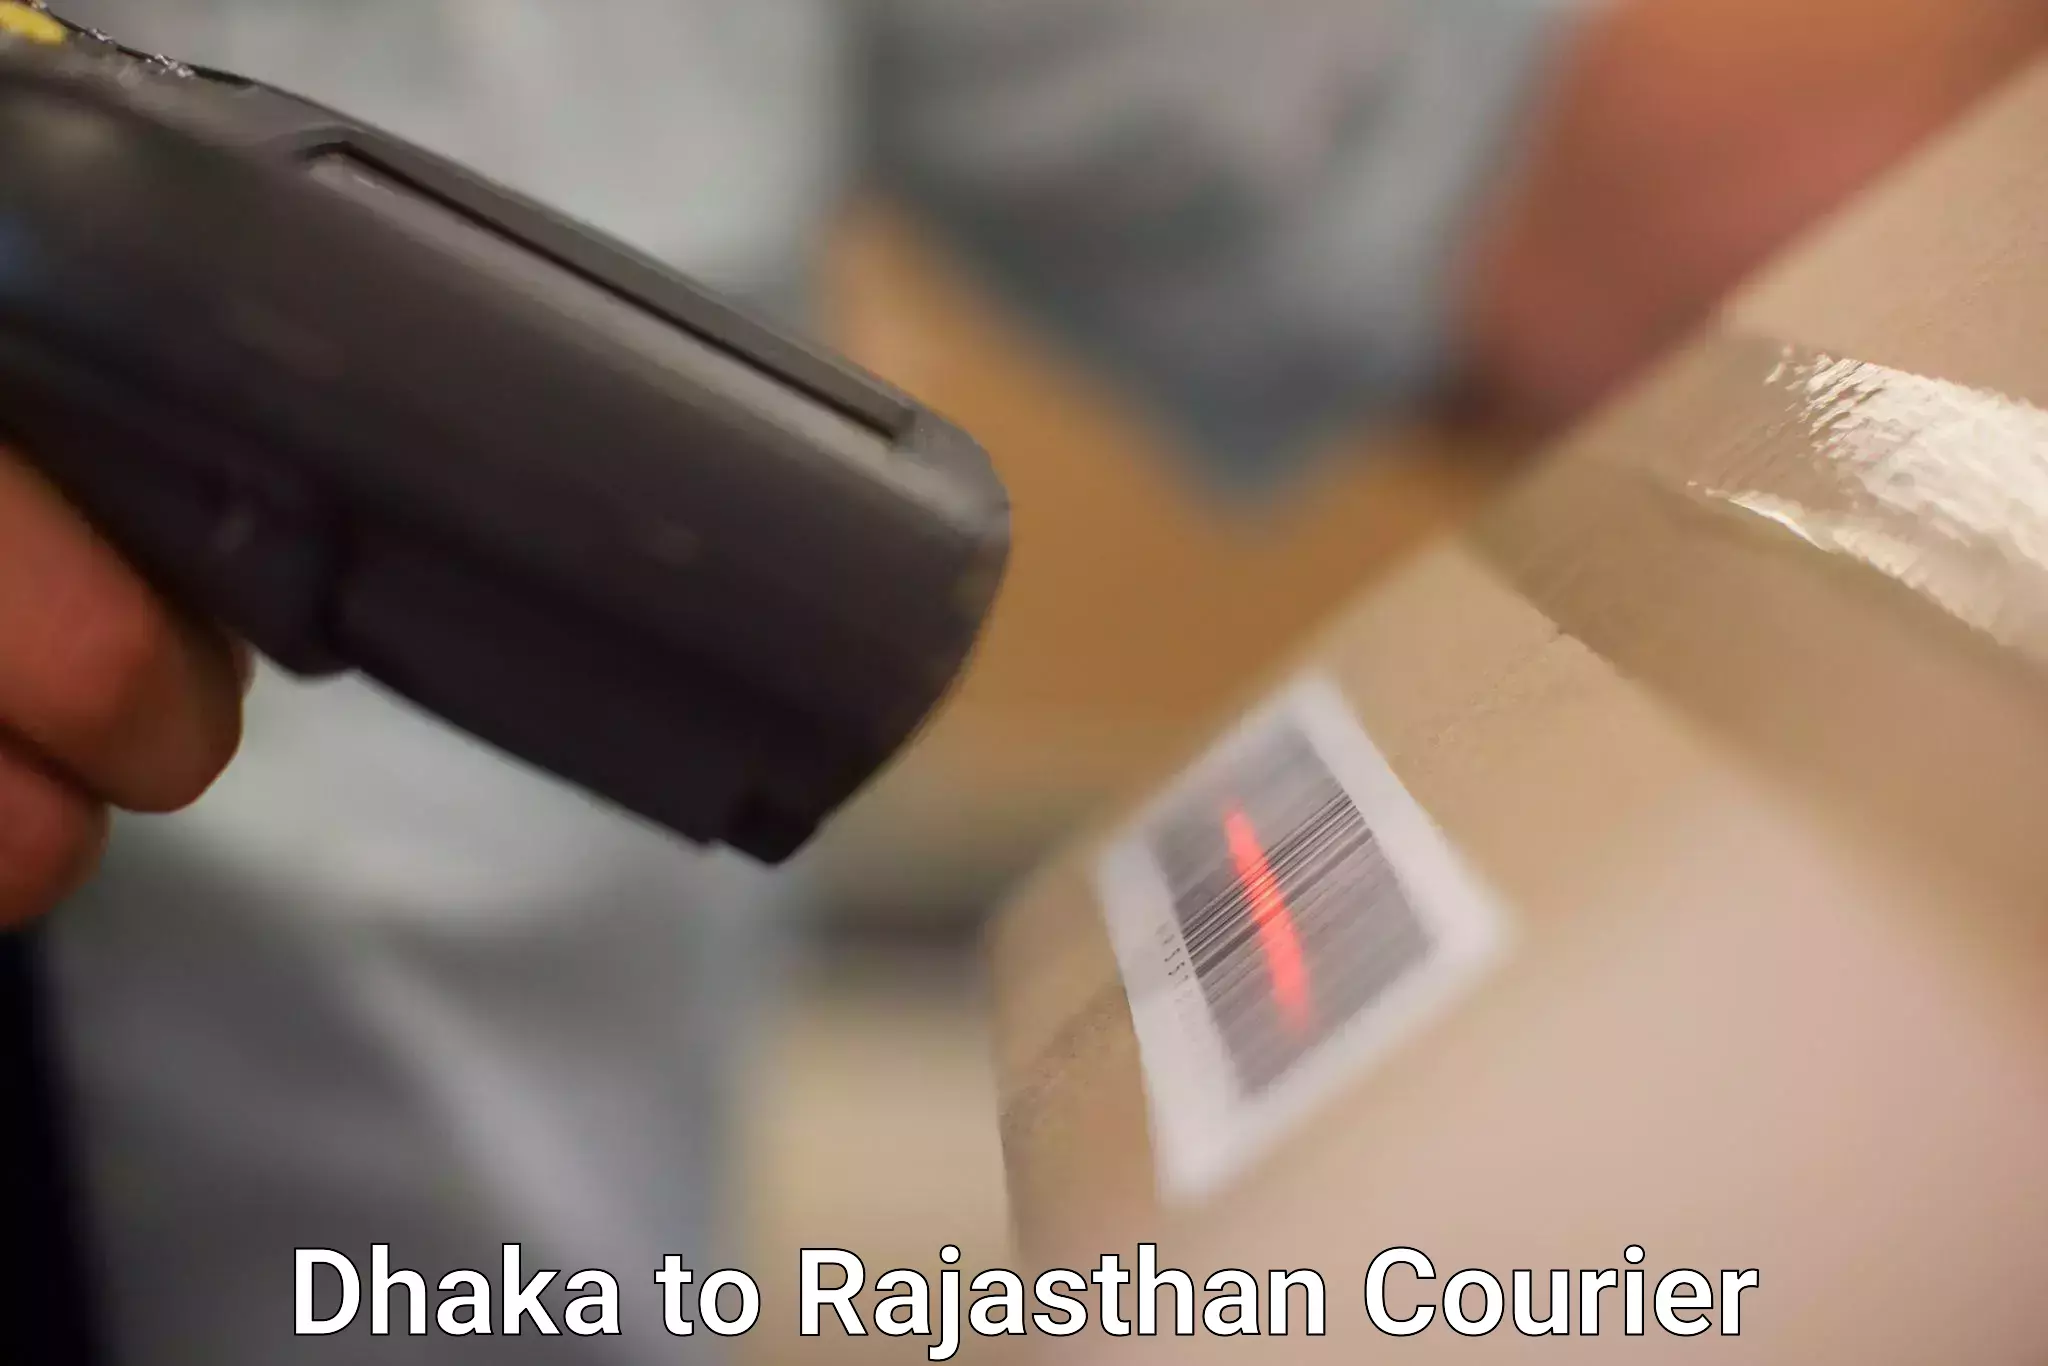 Global shipping networks Dhaka to Rajasthan